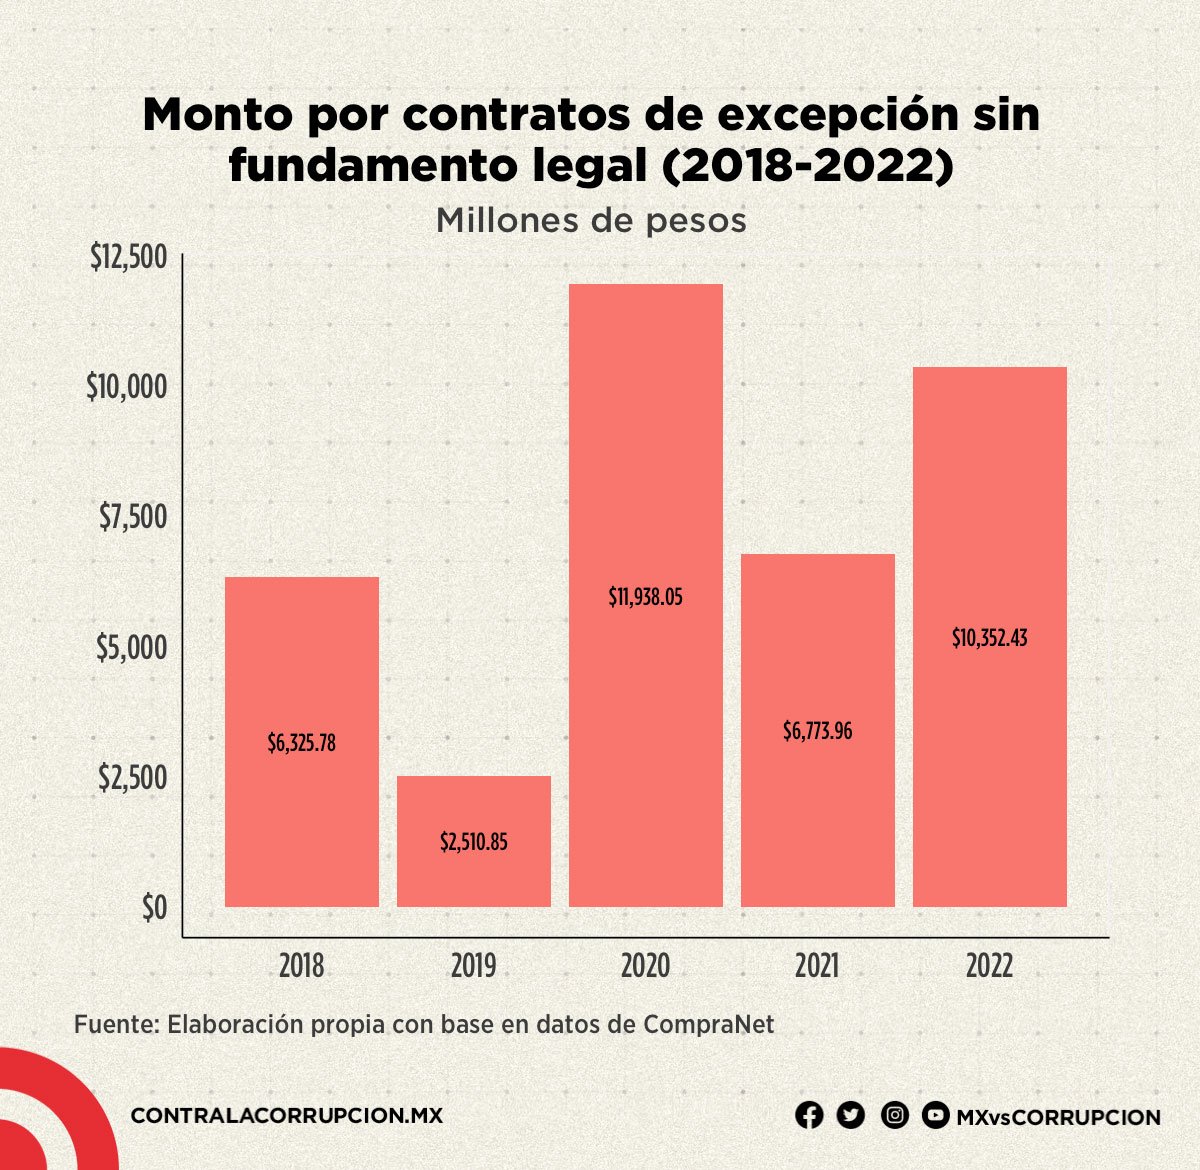 Monto por contratos de excepción sin fundamento legal (2018-2022)